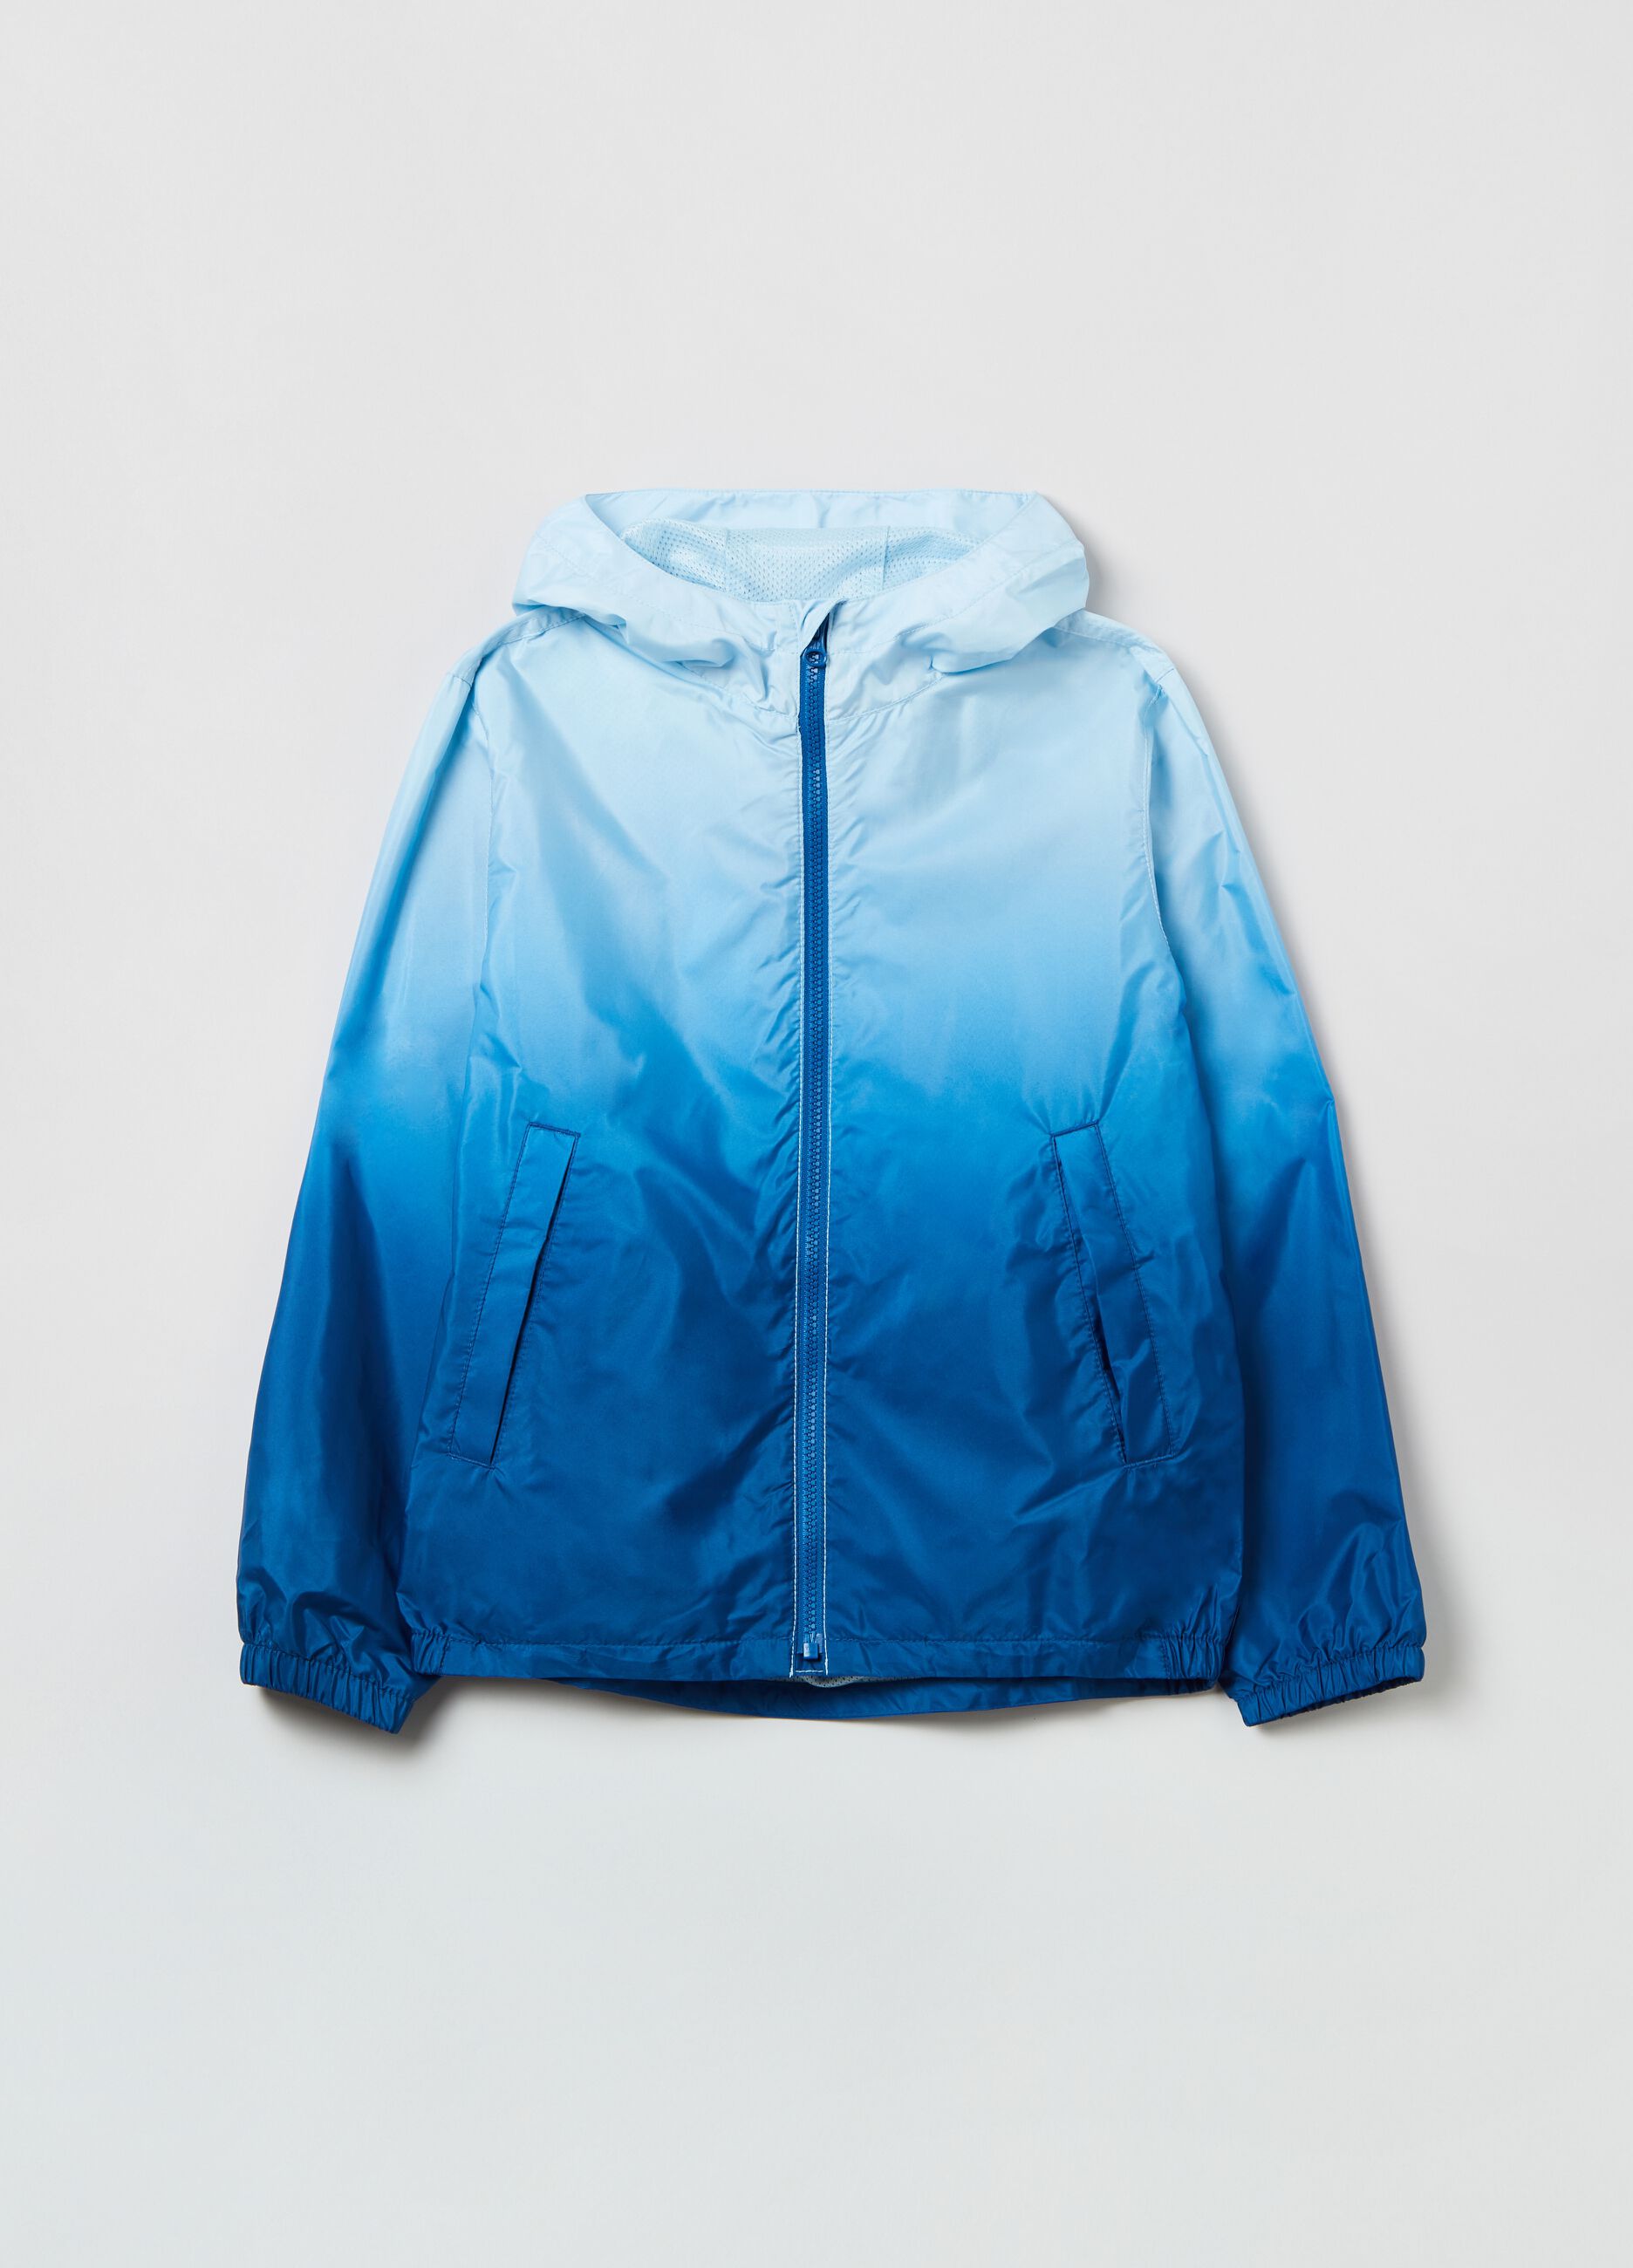 Full-zip jacket with degradé effect